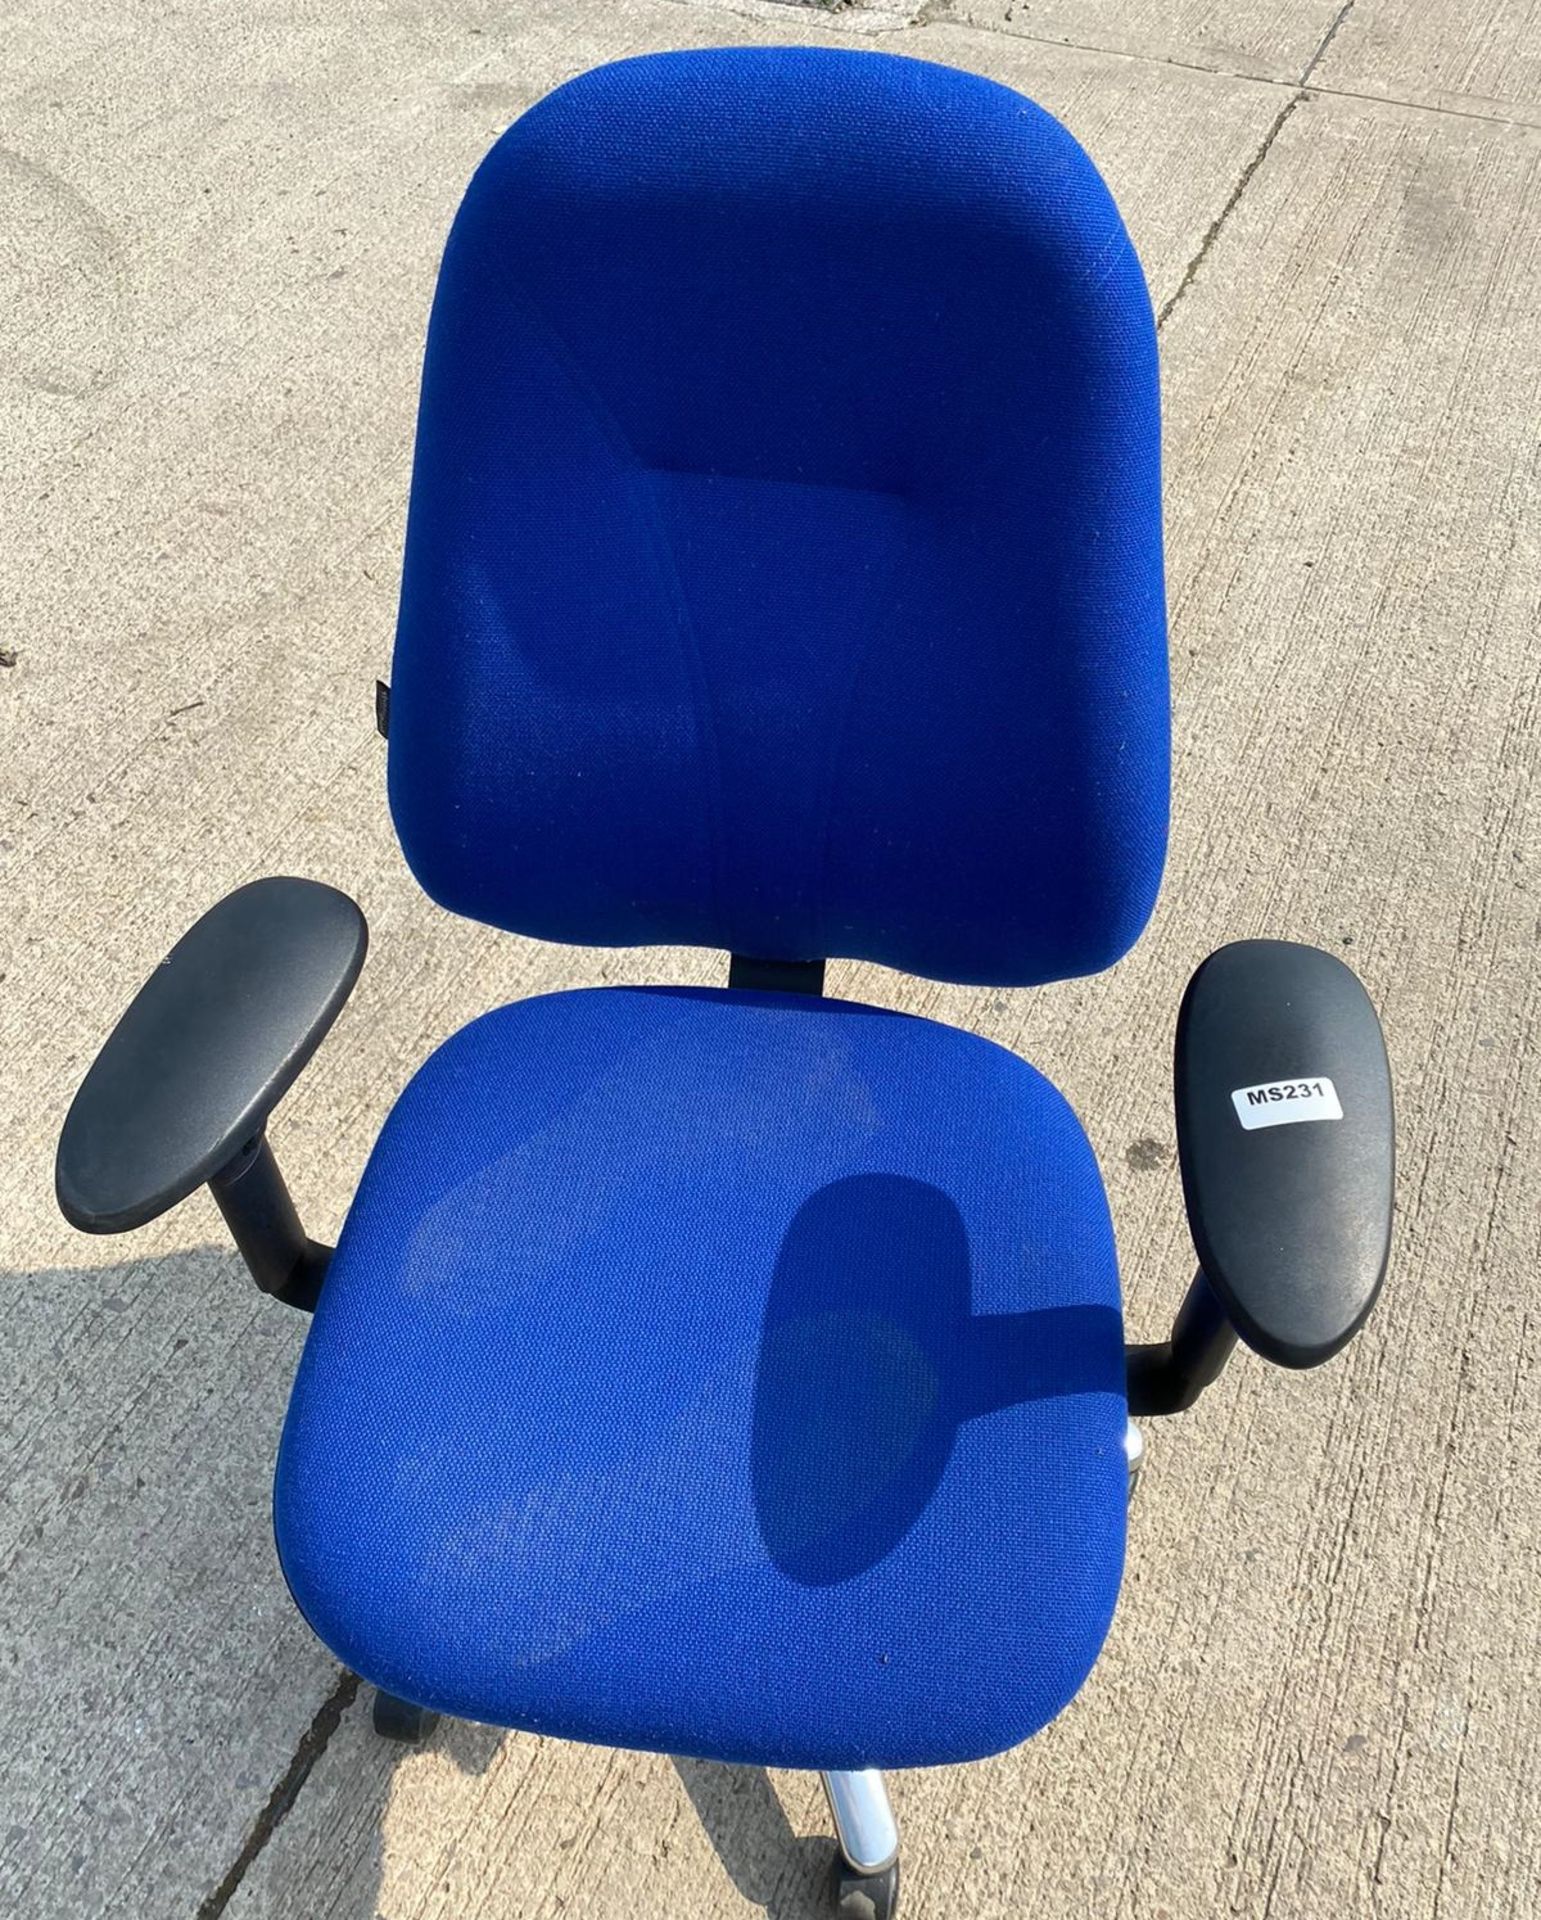 1 x Status Therapod 5250 Chair in Blue - Used Condition - Location: Altrincham WA14 - Image 10 of 10